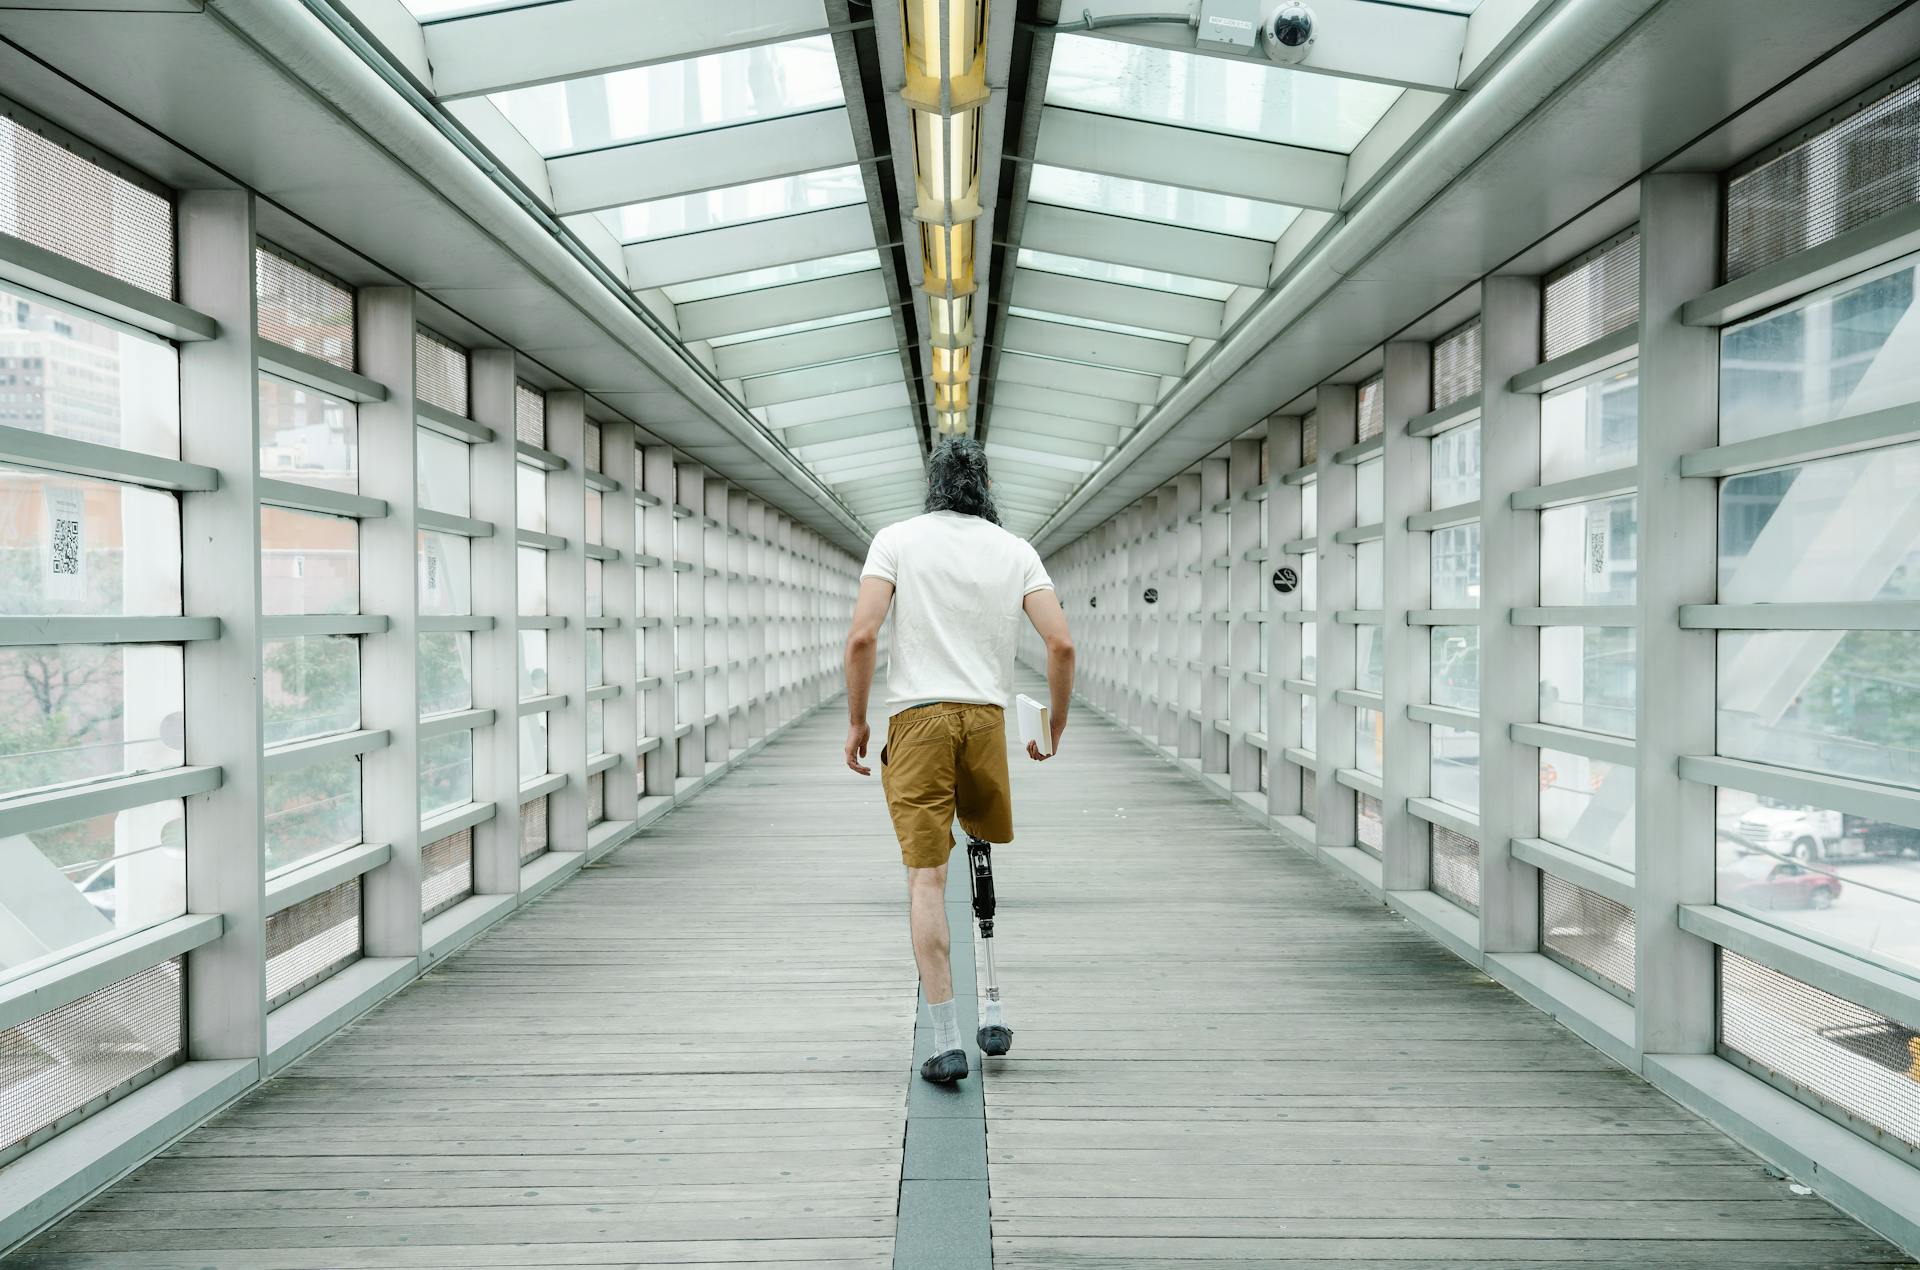 Man with Prosthetic Leg walking inside Footbridge 